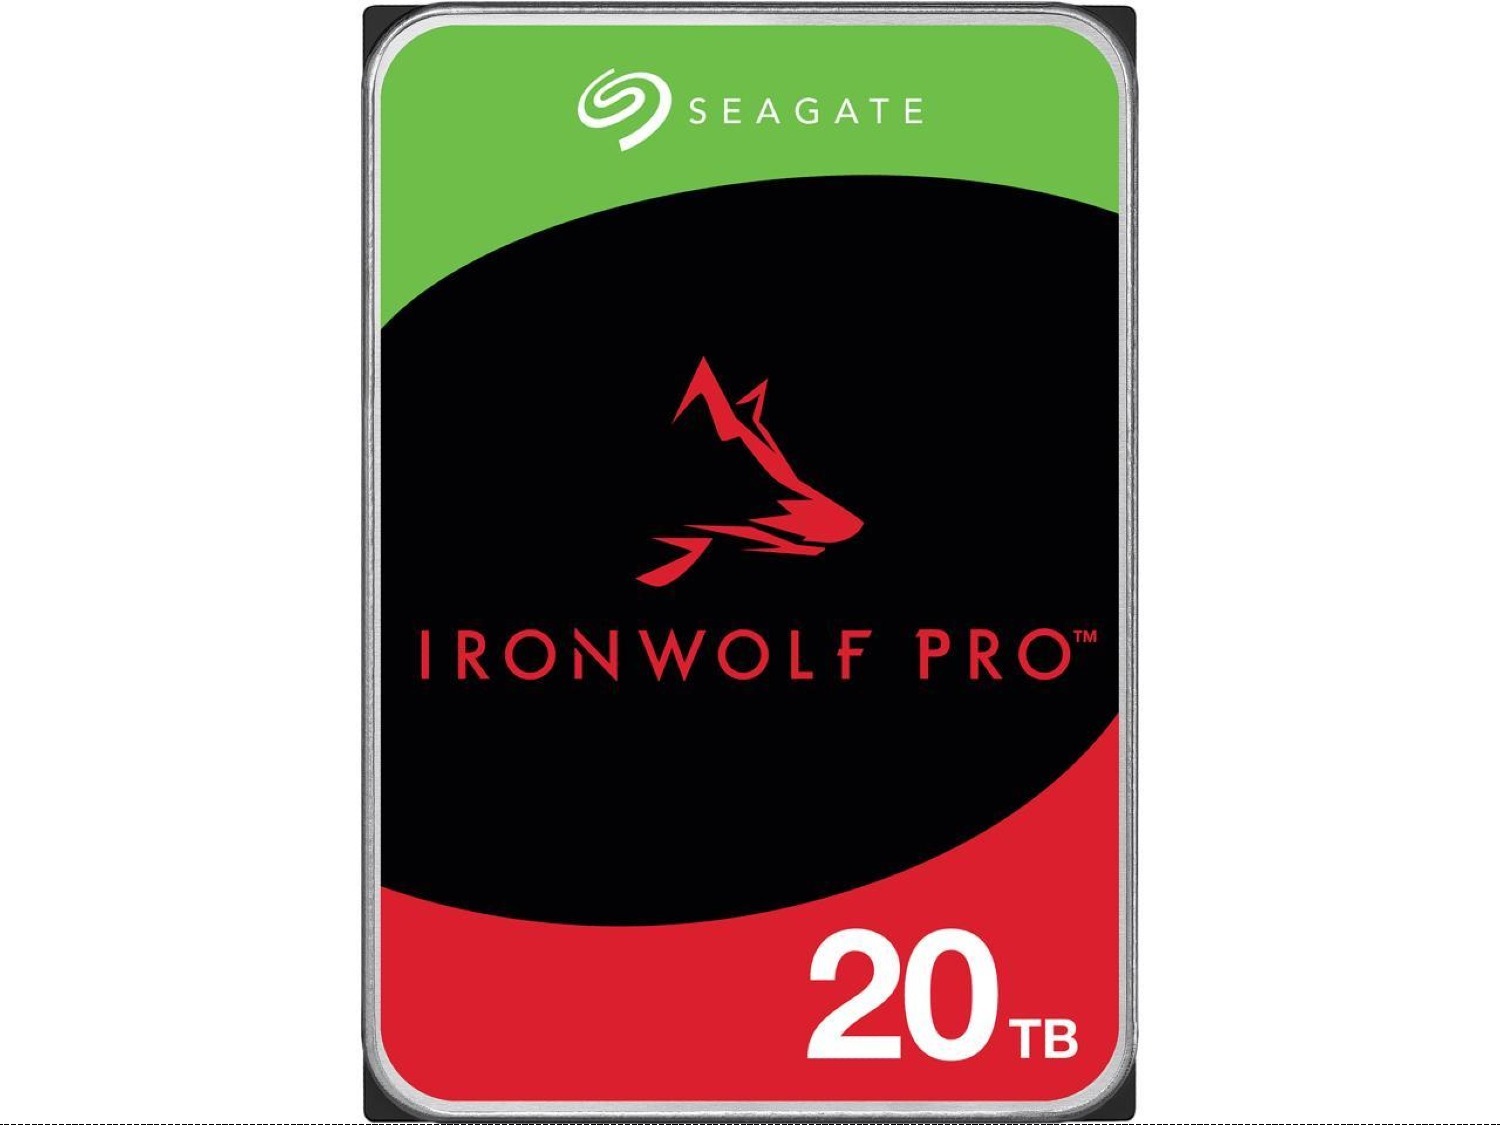 Seagate IronWolf Pro 20TB NAS Hard Drive 7200 RPM 256MB Cache CMR SATA 6.0Gb/s 3.5" Internal HDD $339.99 + Free Shipping